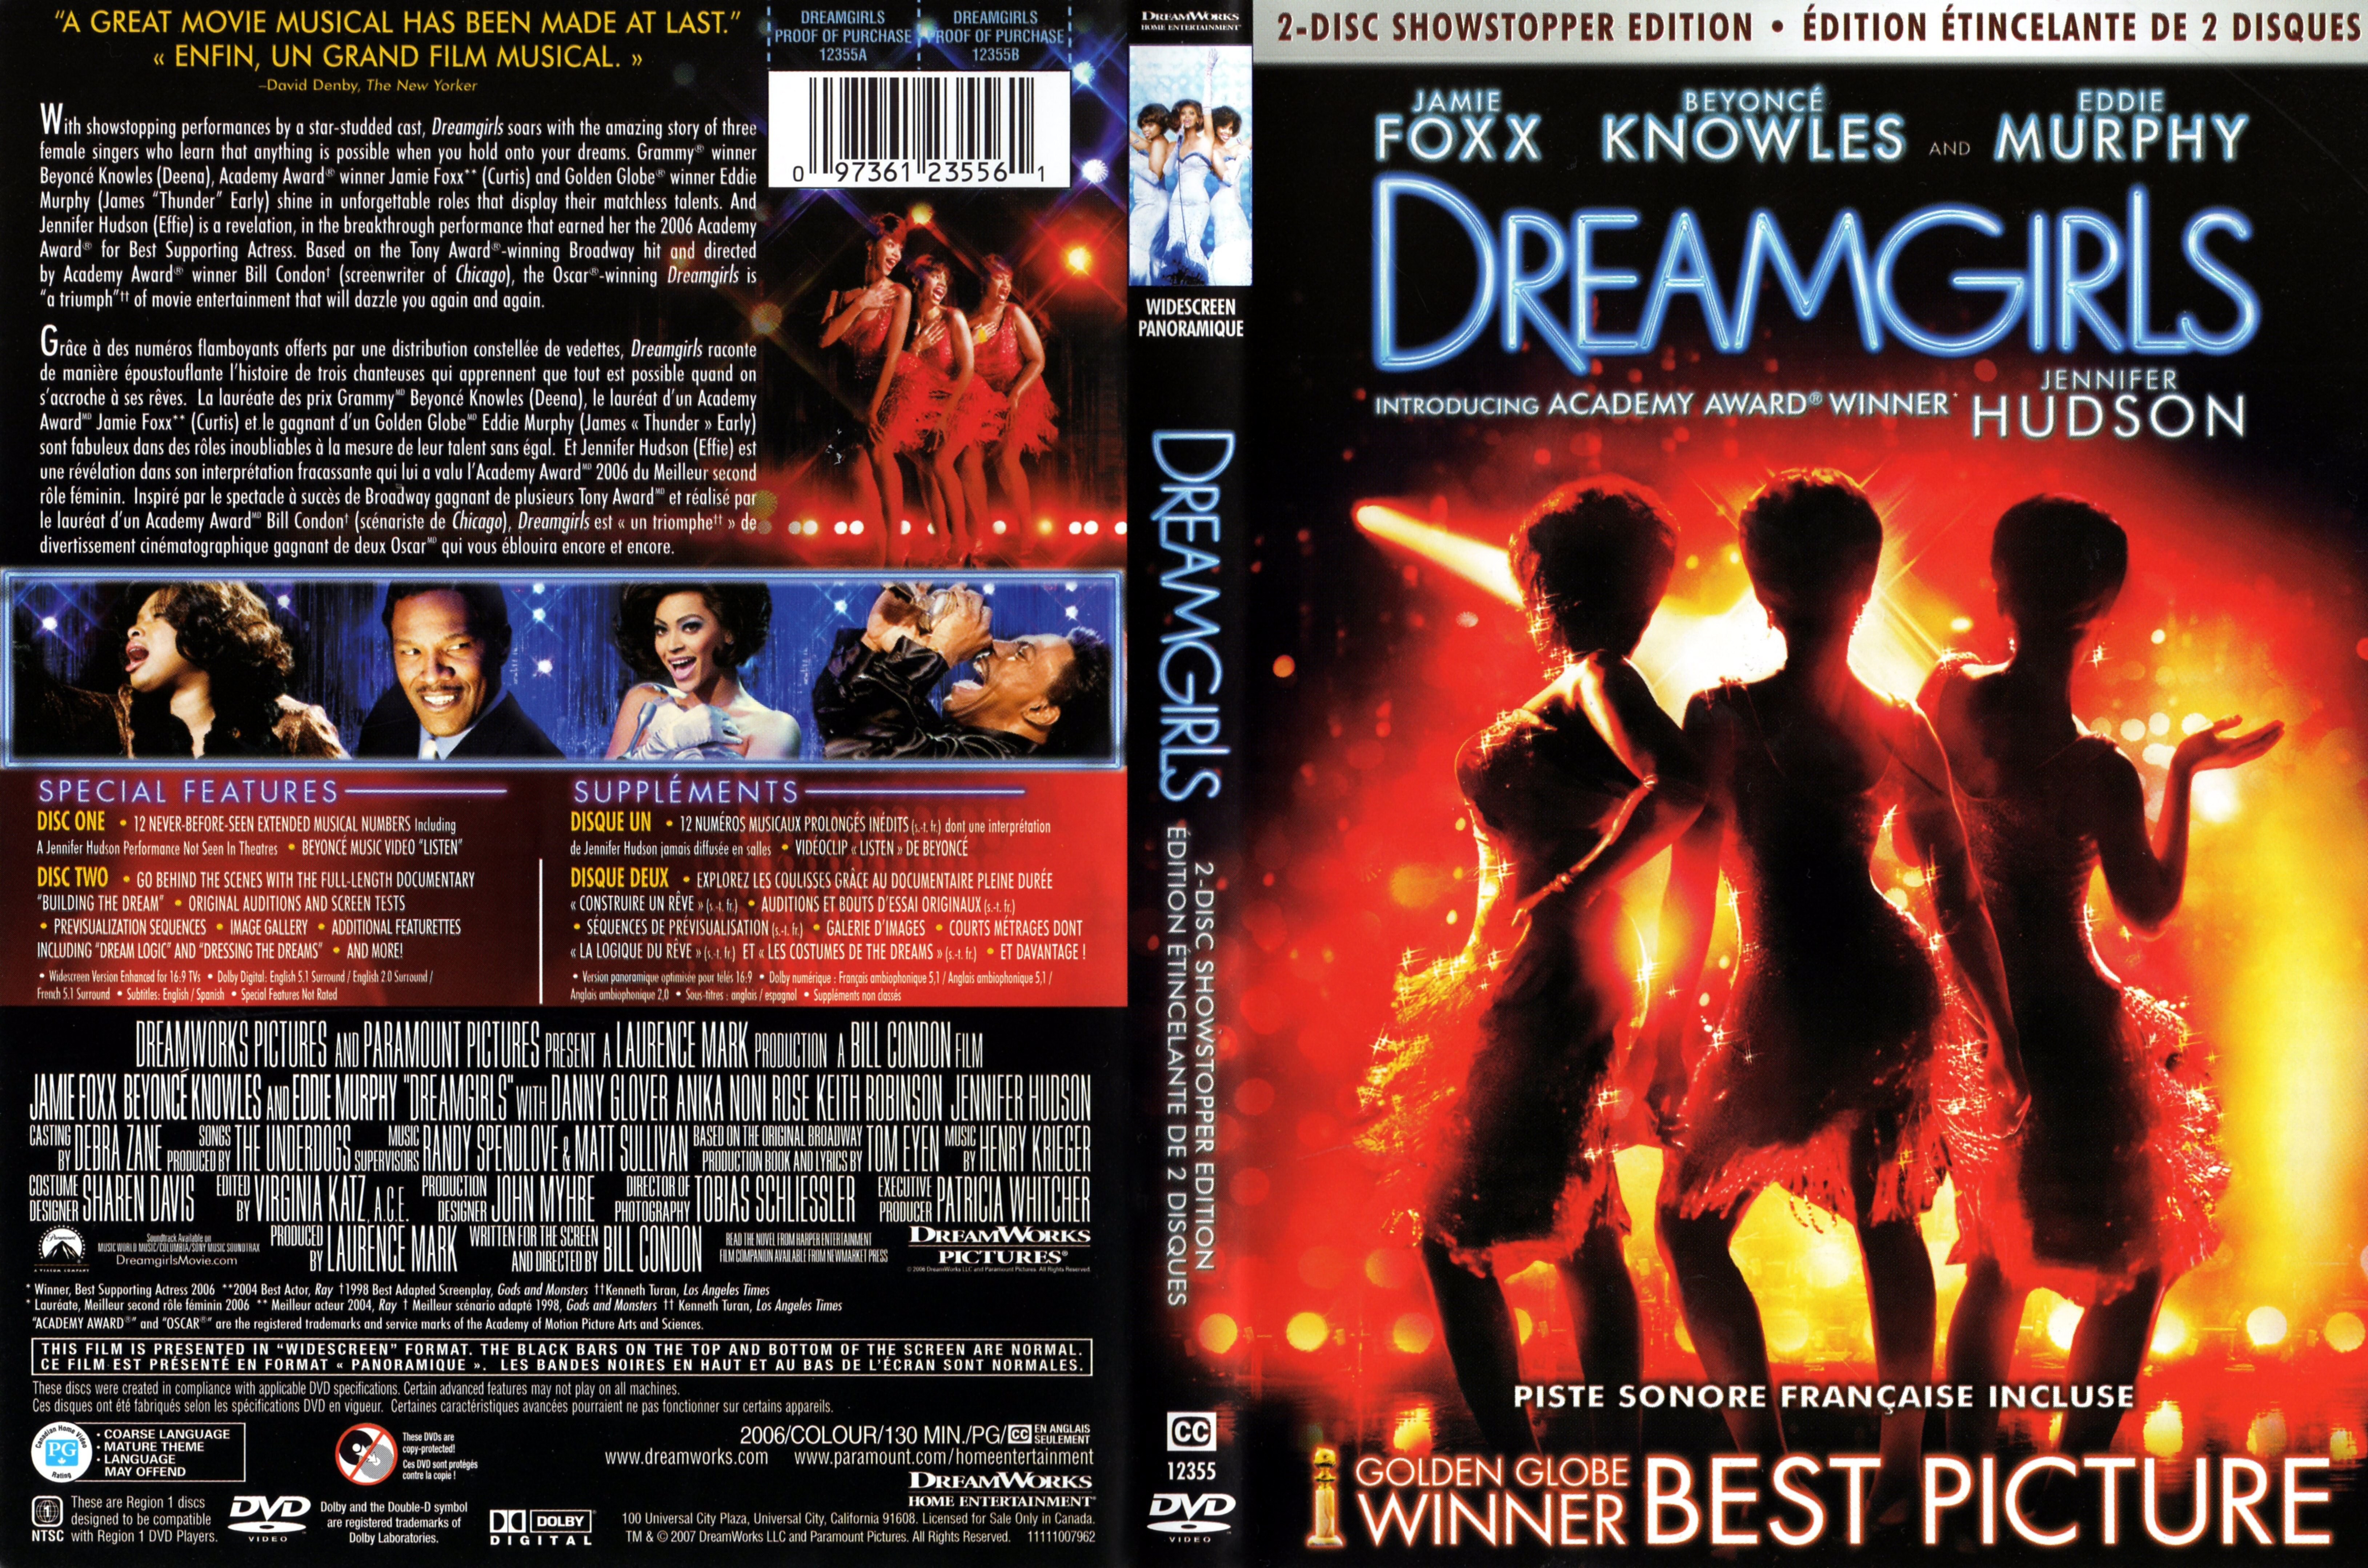 Jaquette DVD Dreamgirls Zone 1